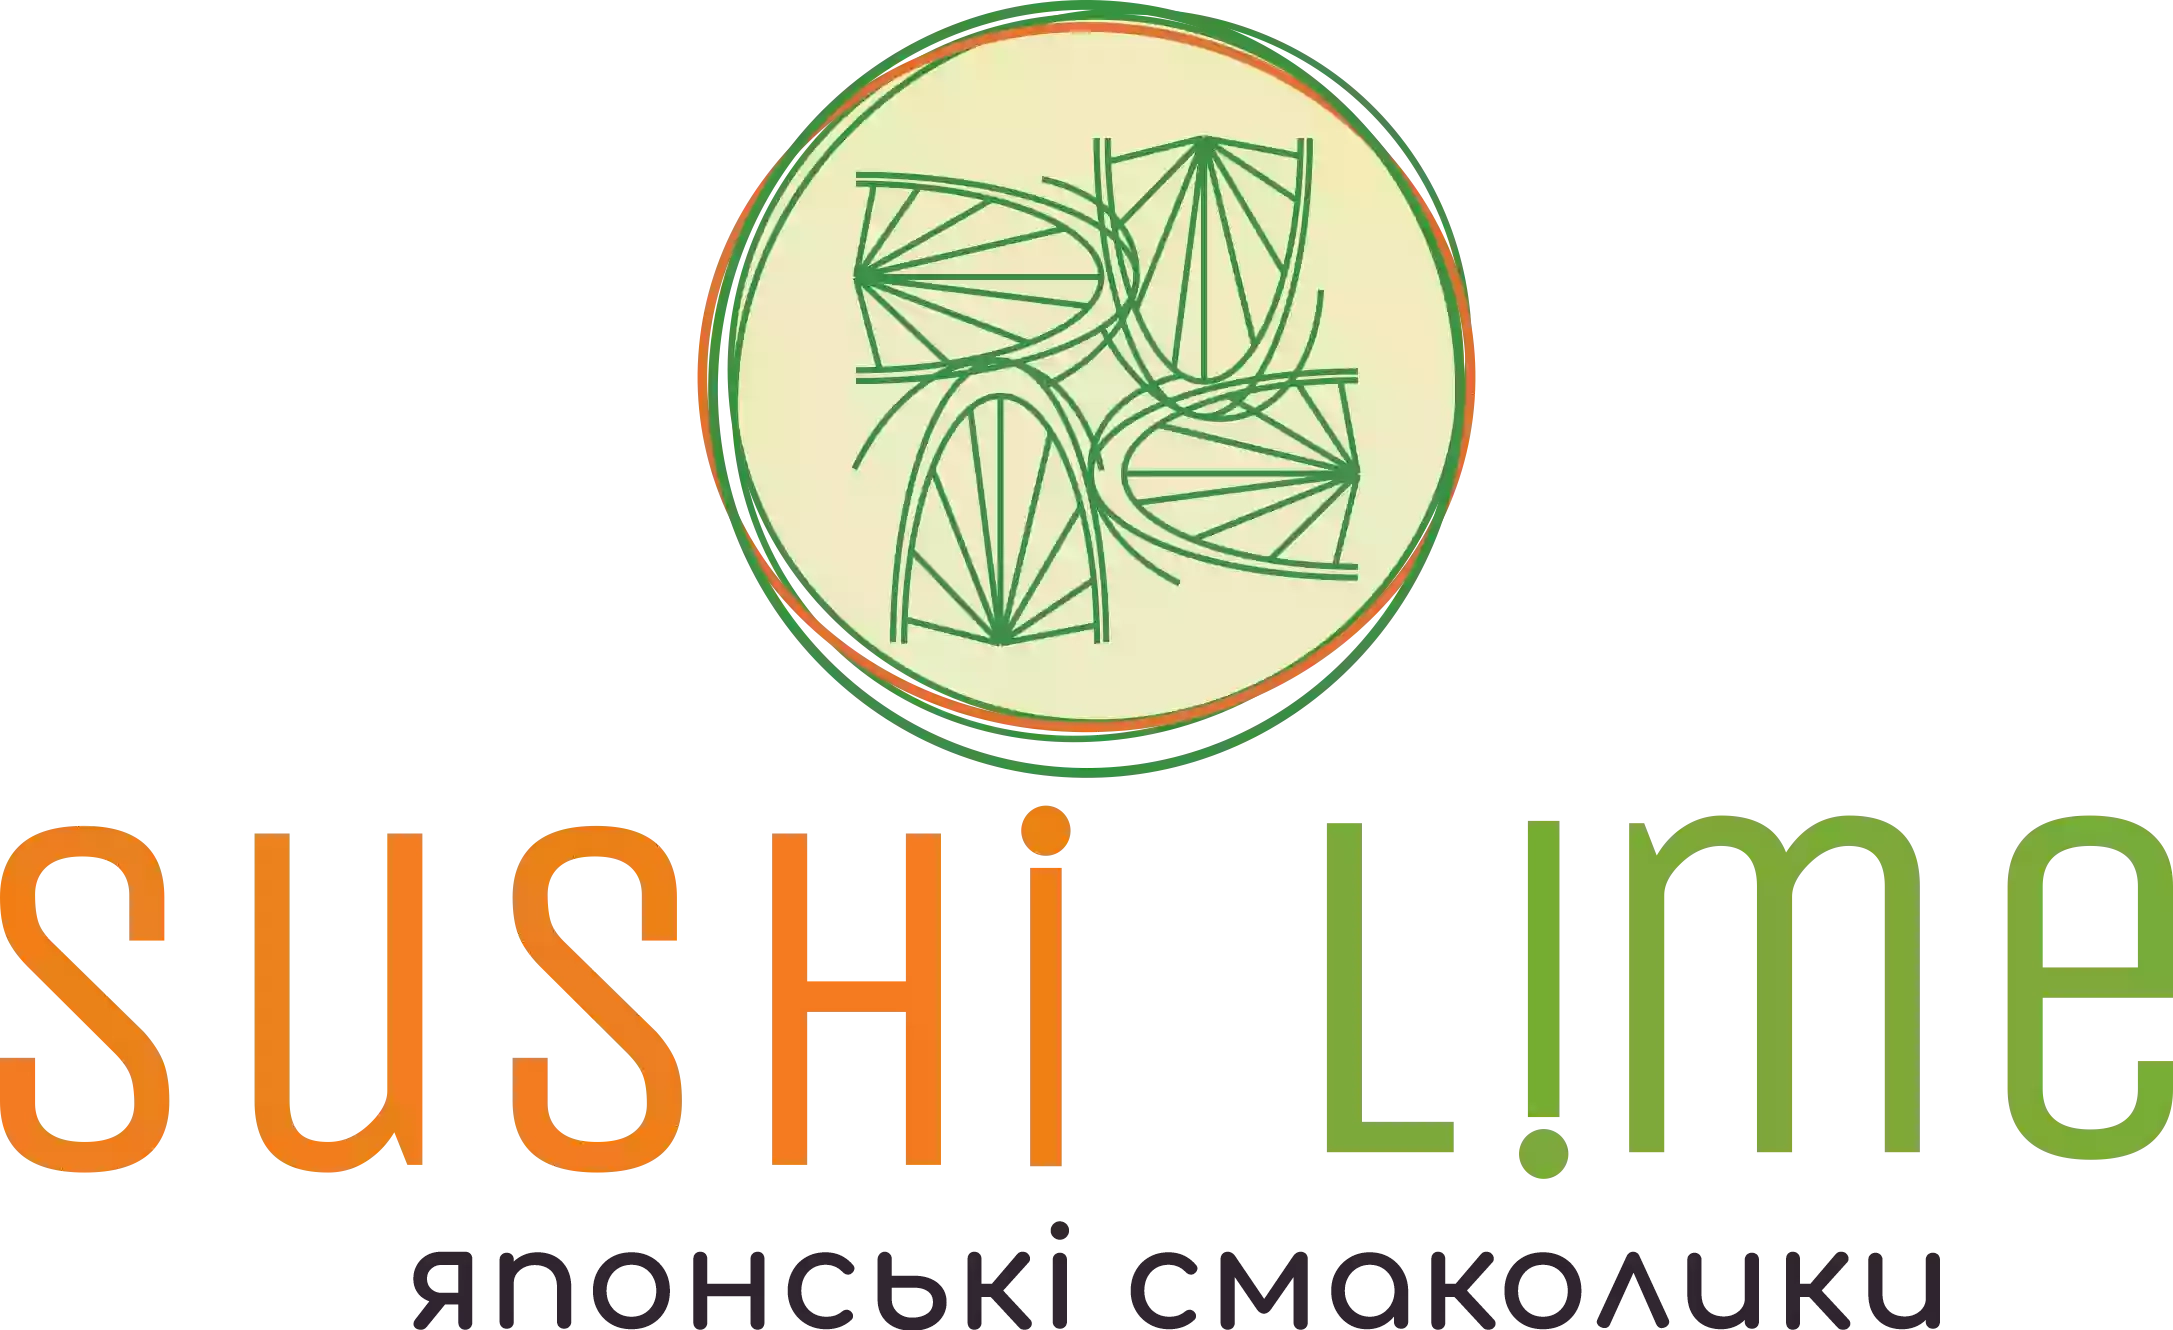 Sushi Lime